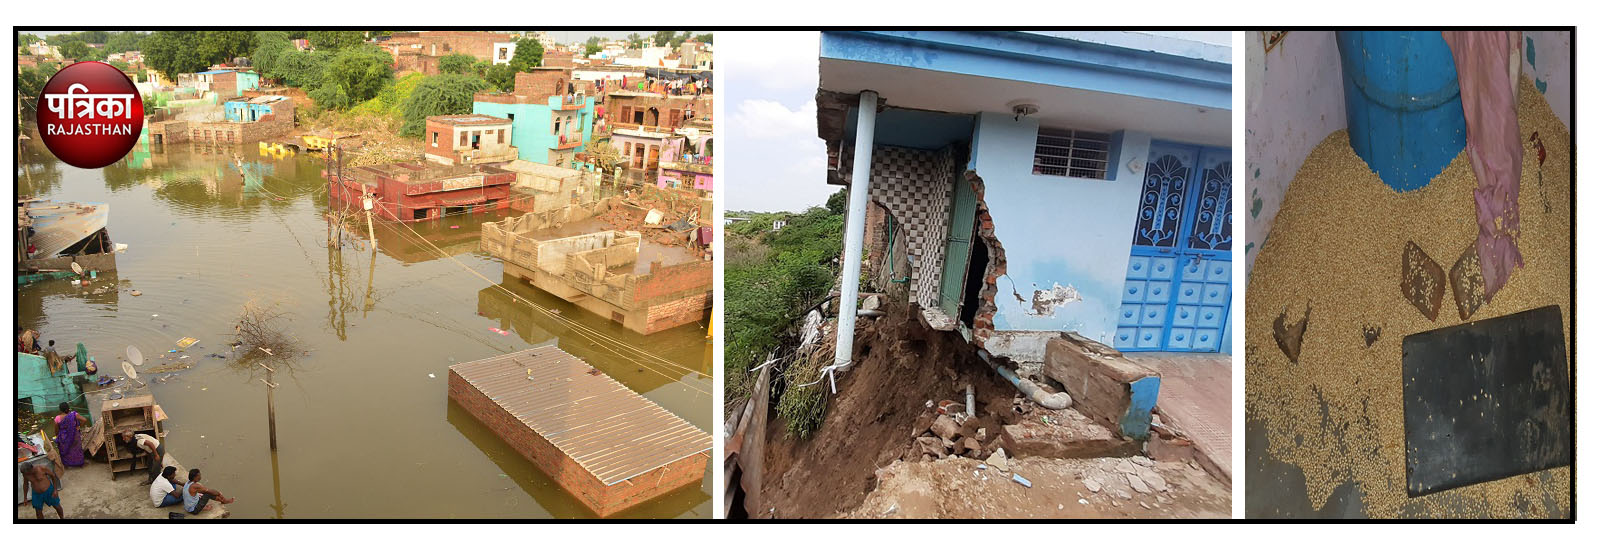 kota floodChambal's water level falls destruction in low-lying settlem